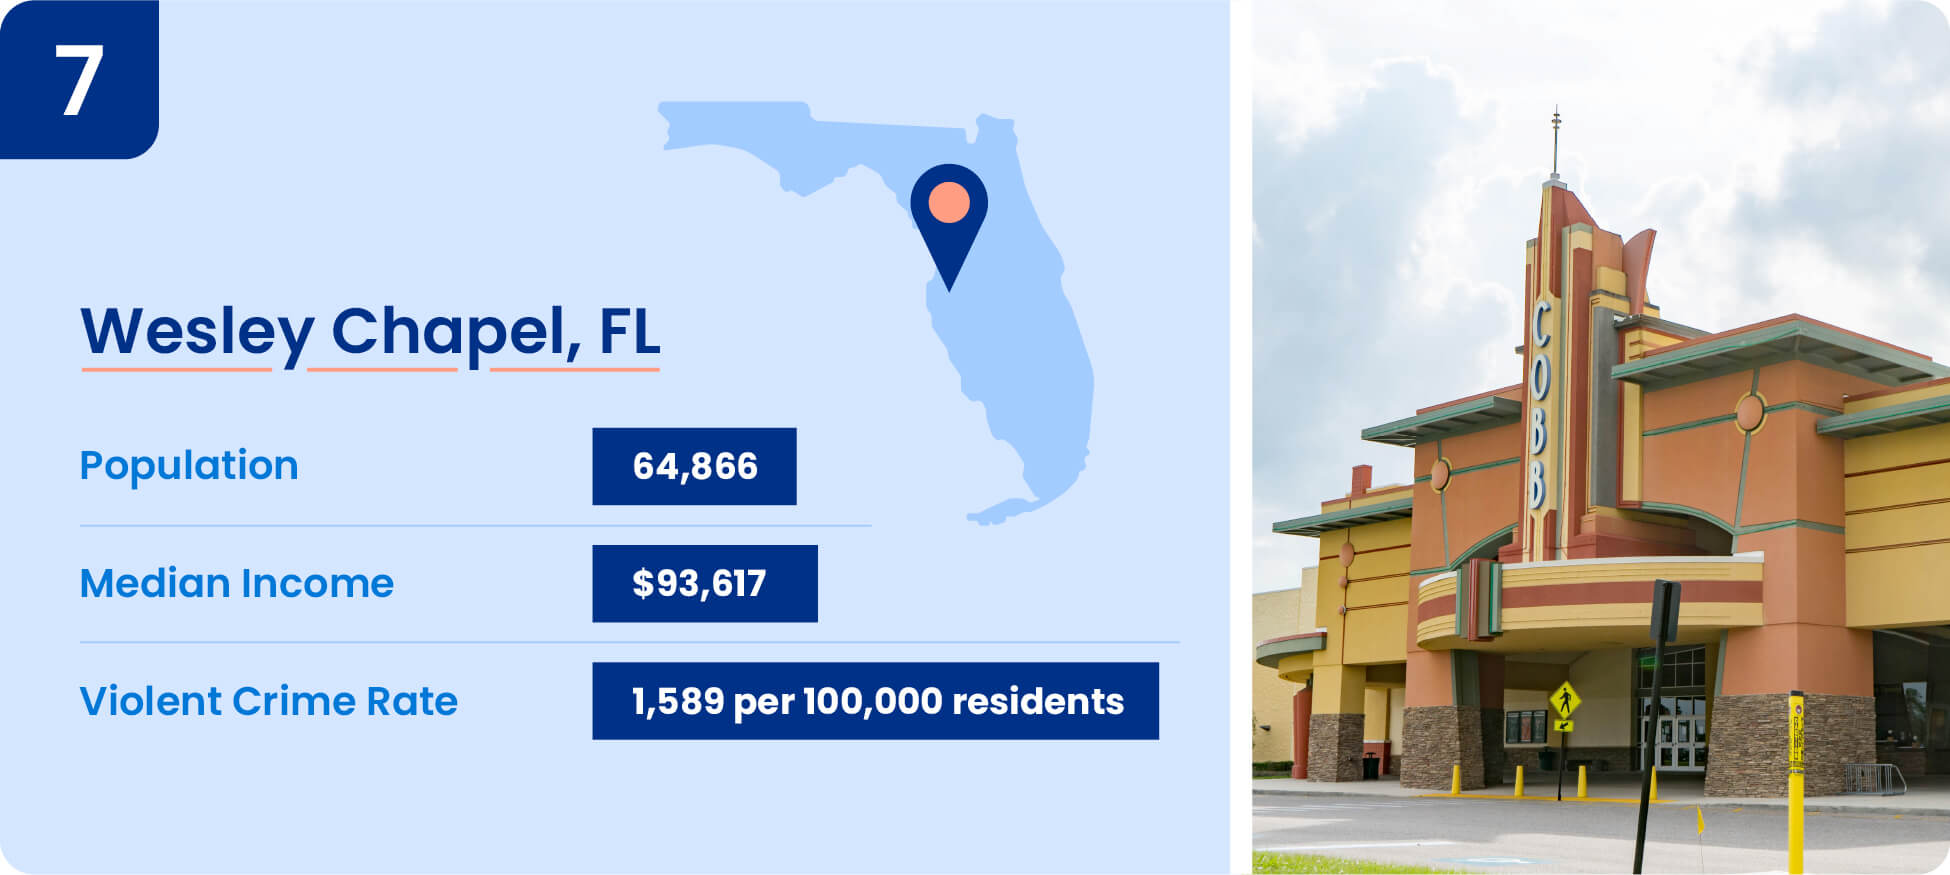 Image shows safety data including median income, population, and violent crime rate for Wesley Chapel, Florida.